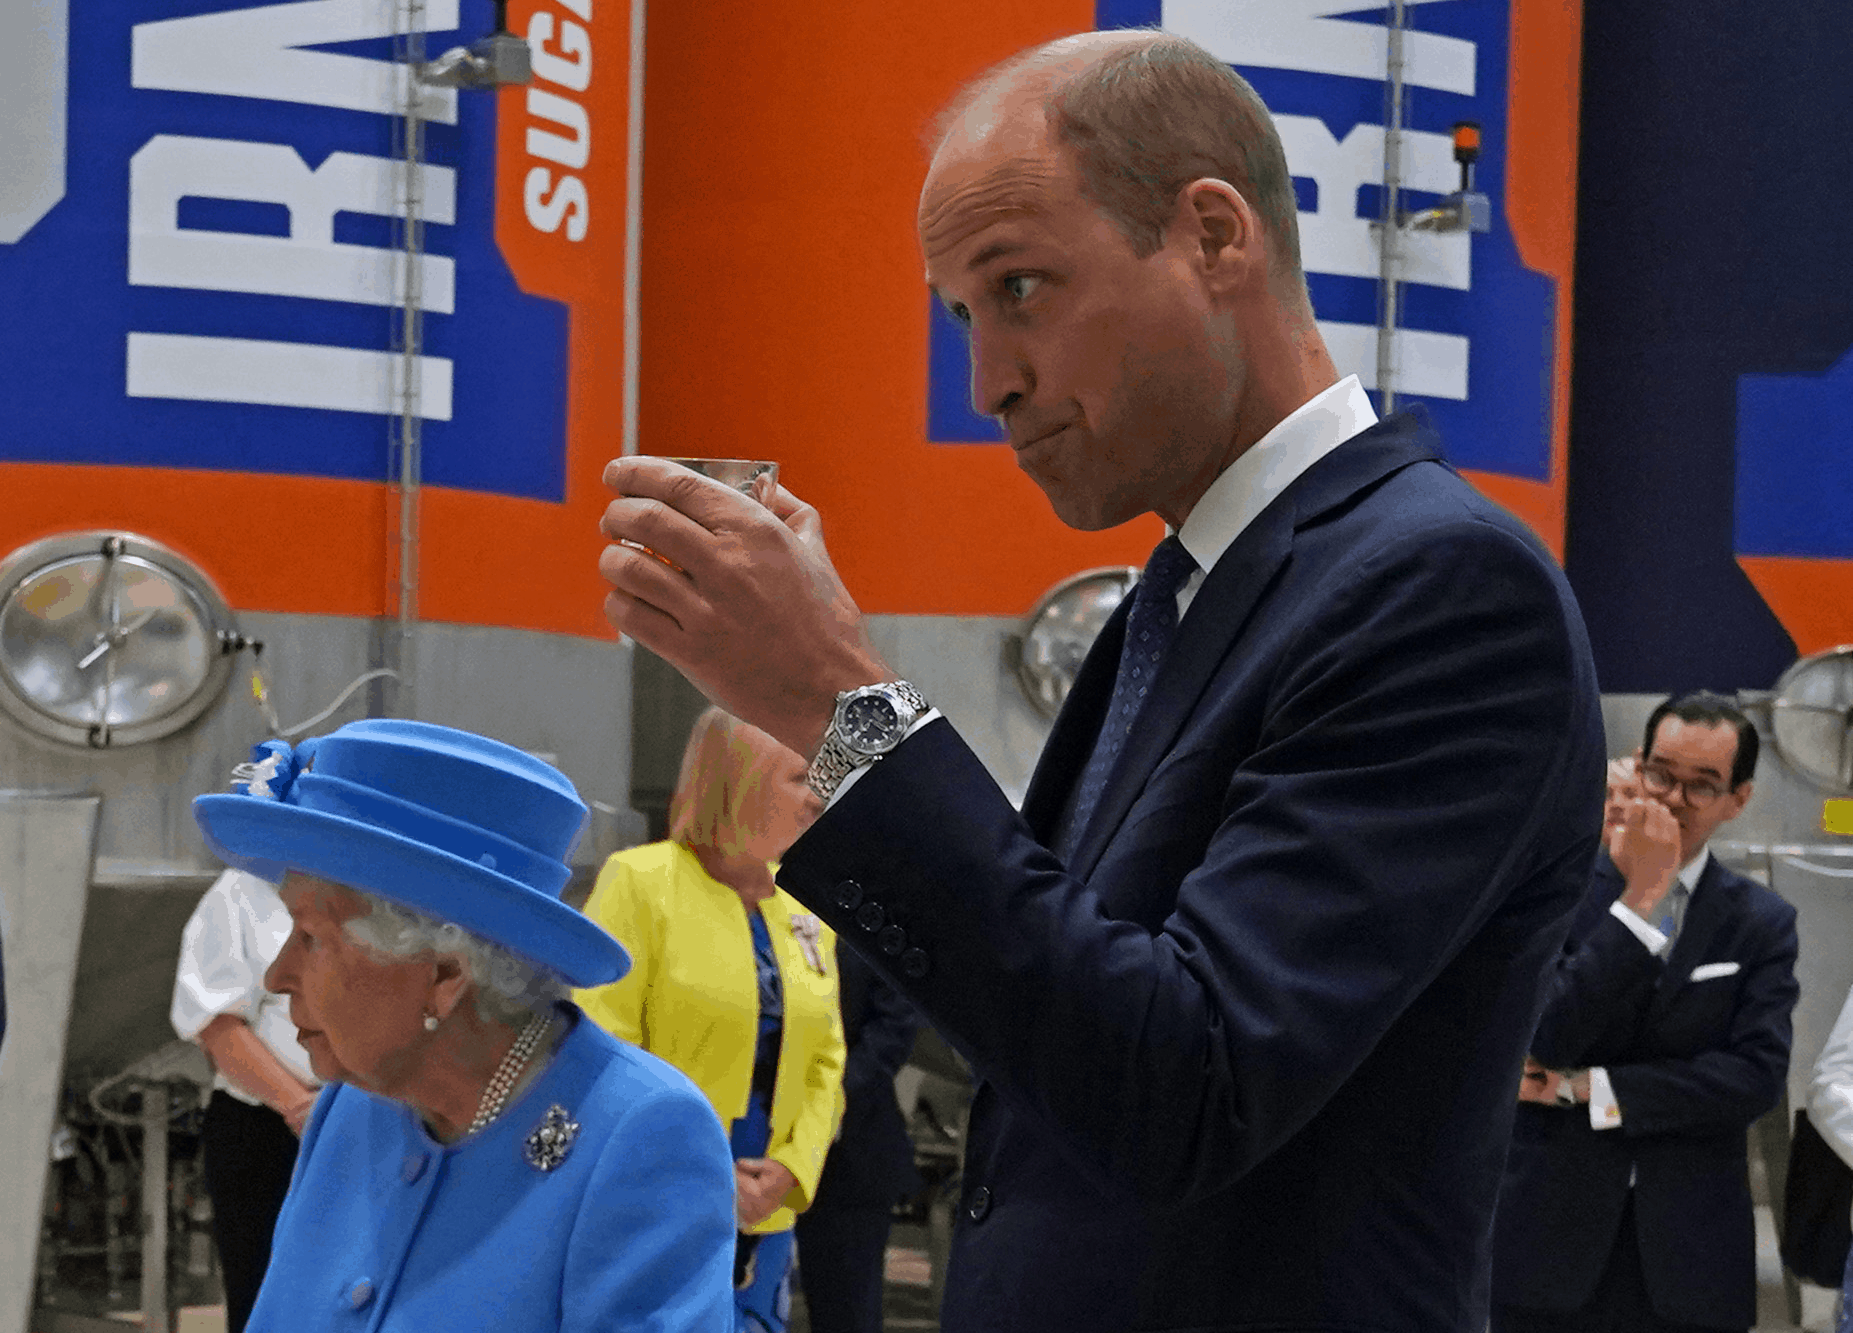 Queen and Duke of Cambridge tour Irn Bru factory on Scotland visit